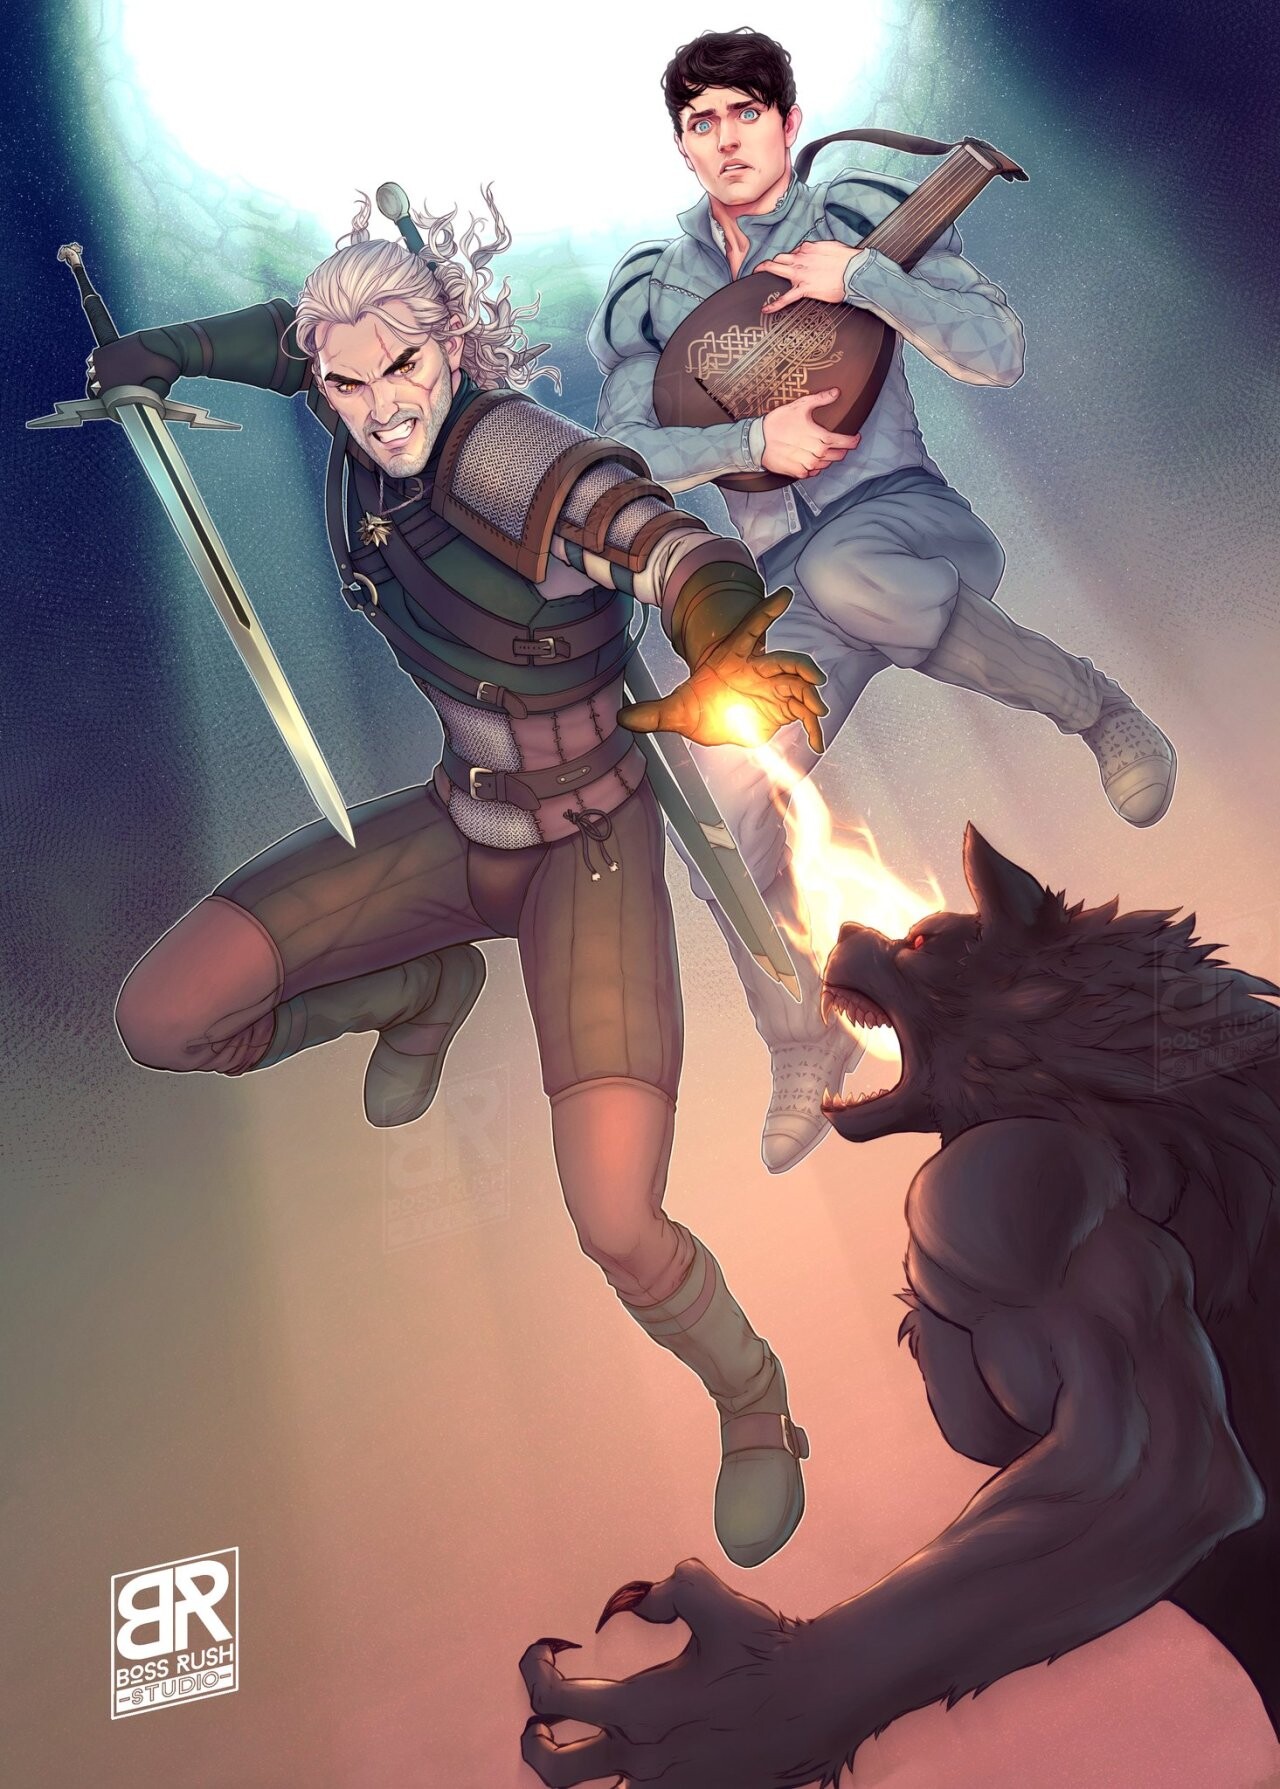 Geralt and Jaskier.